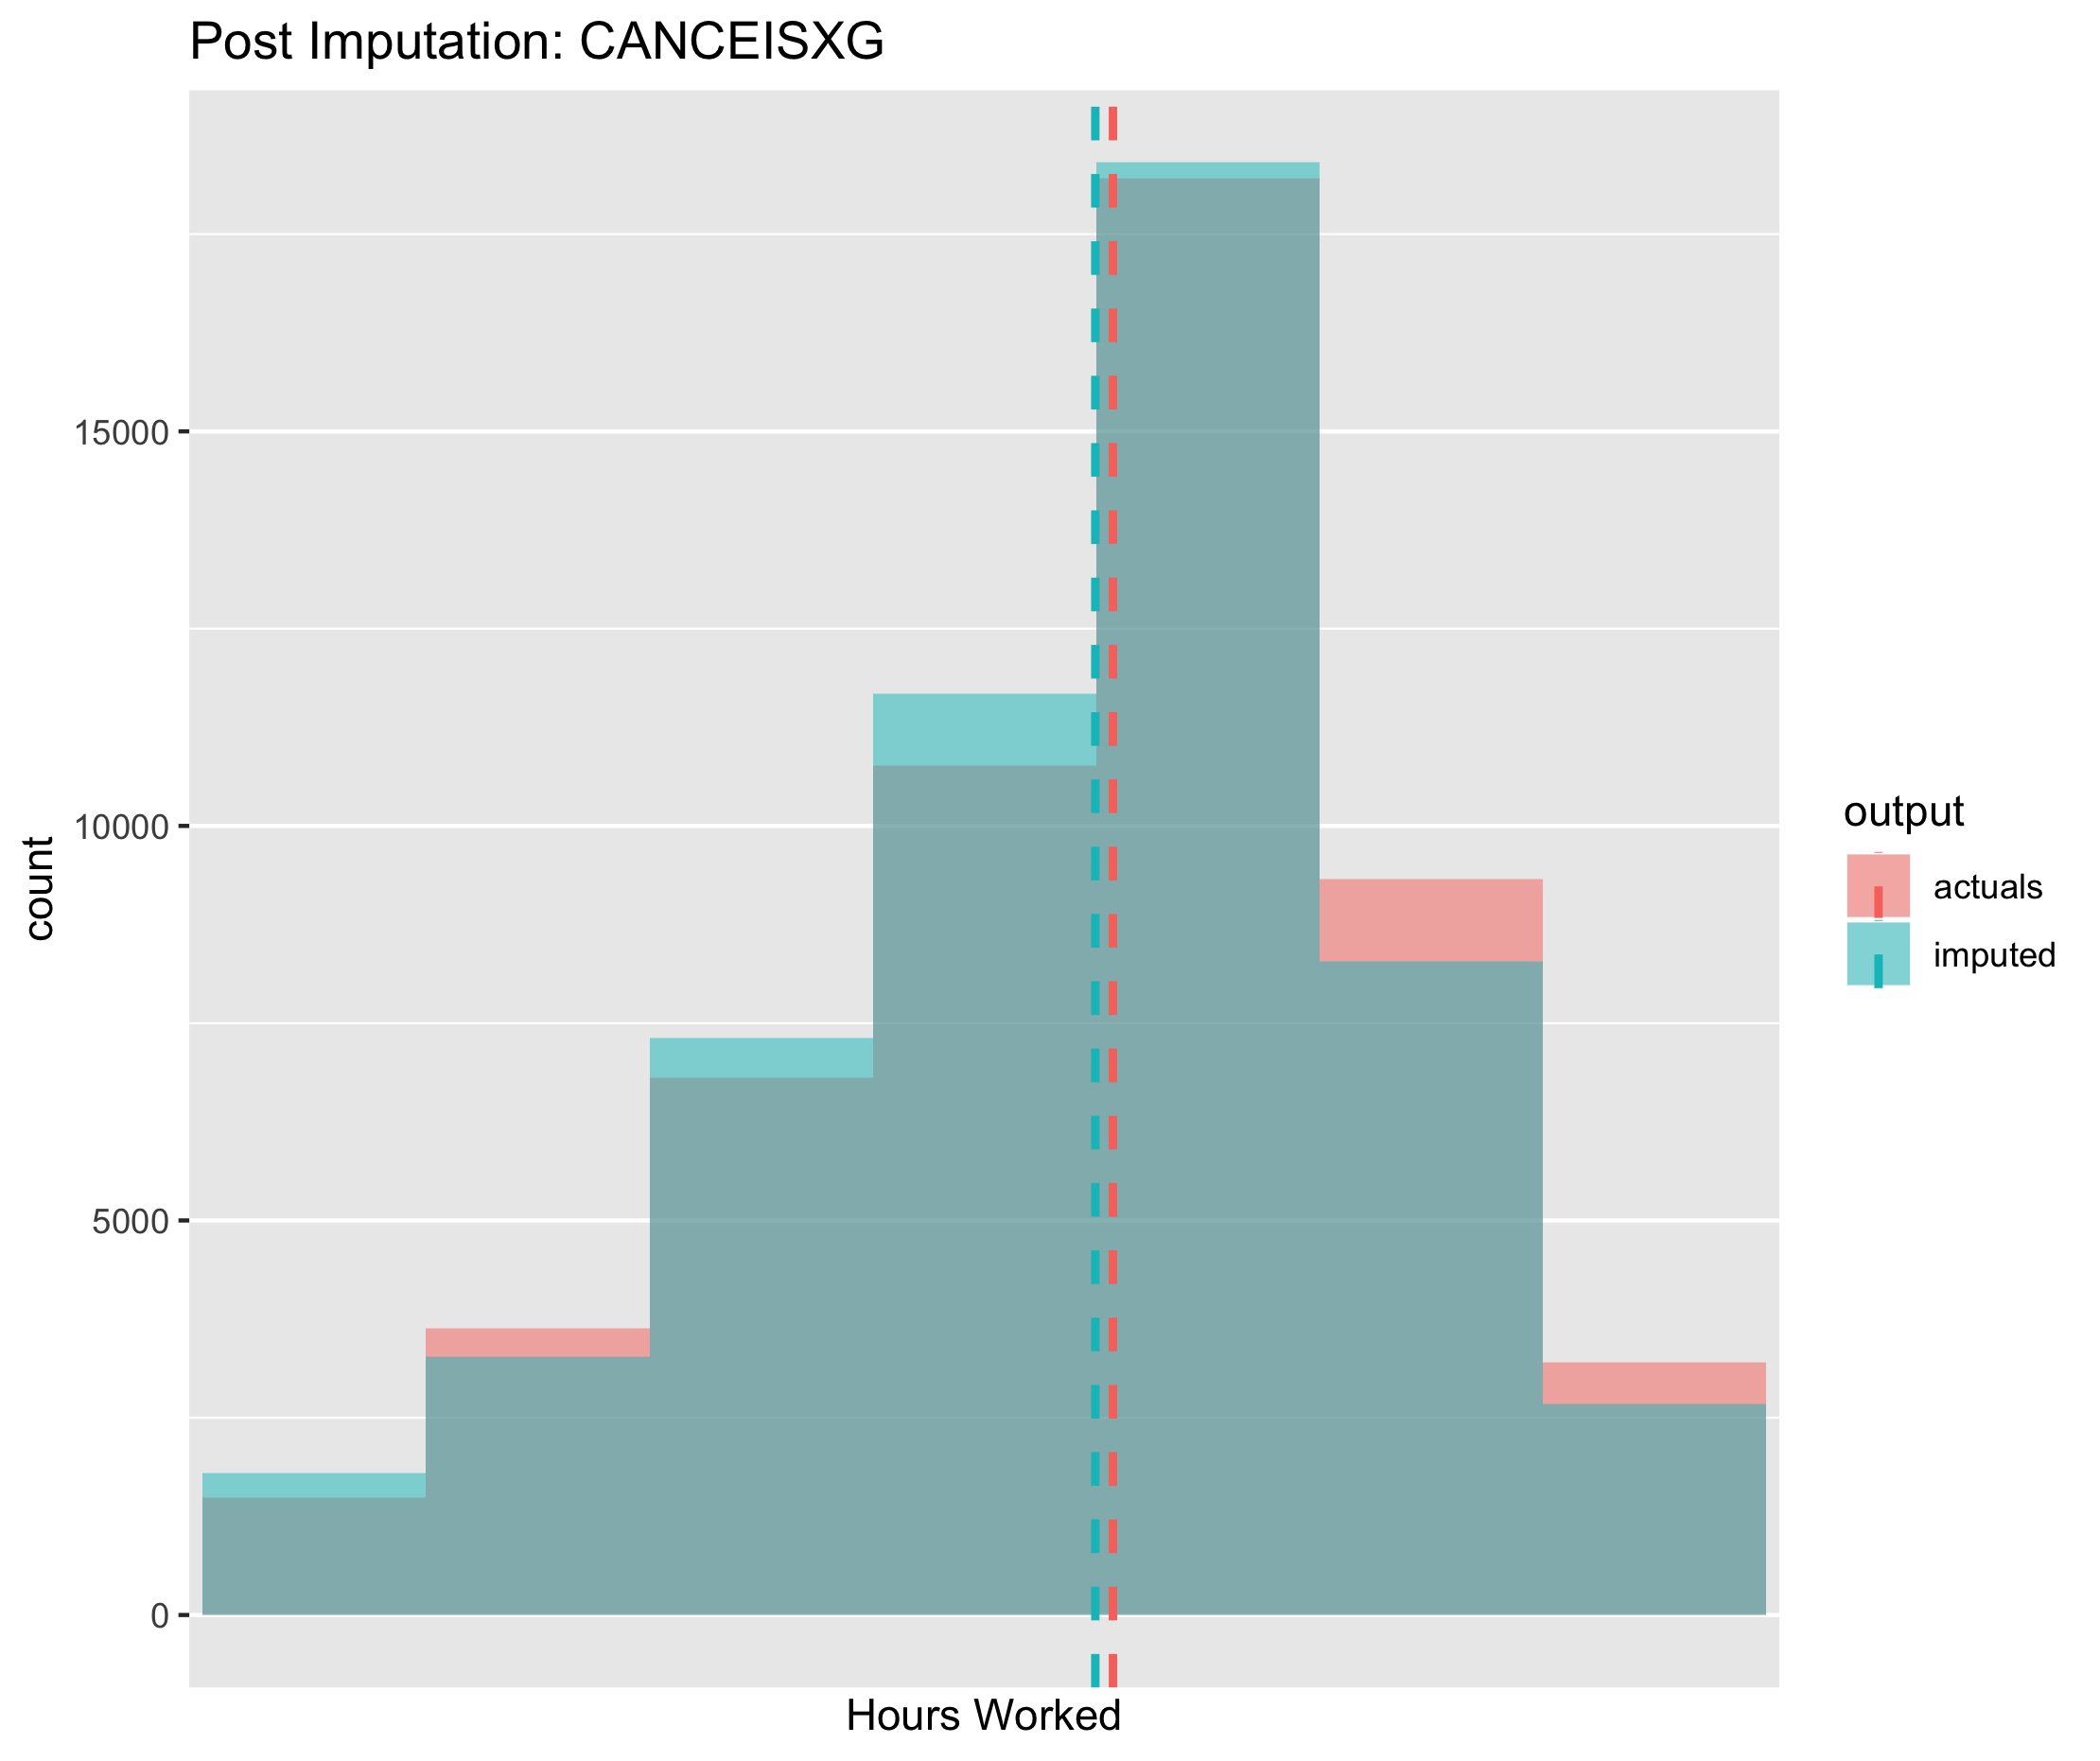 Figure 6.12. Post imputation distribution of economic activity using CANCEIS imputation